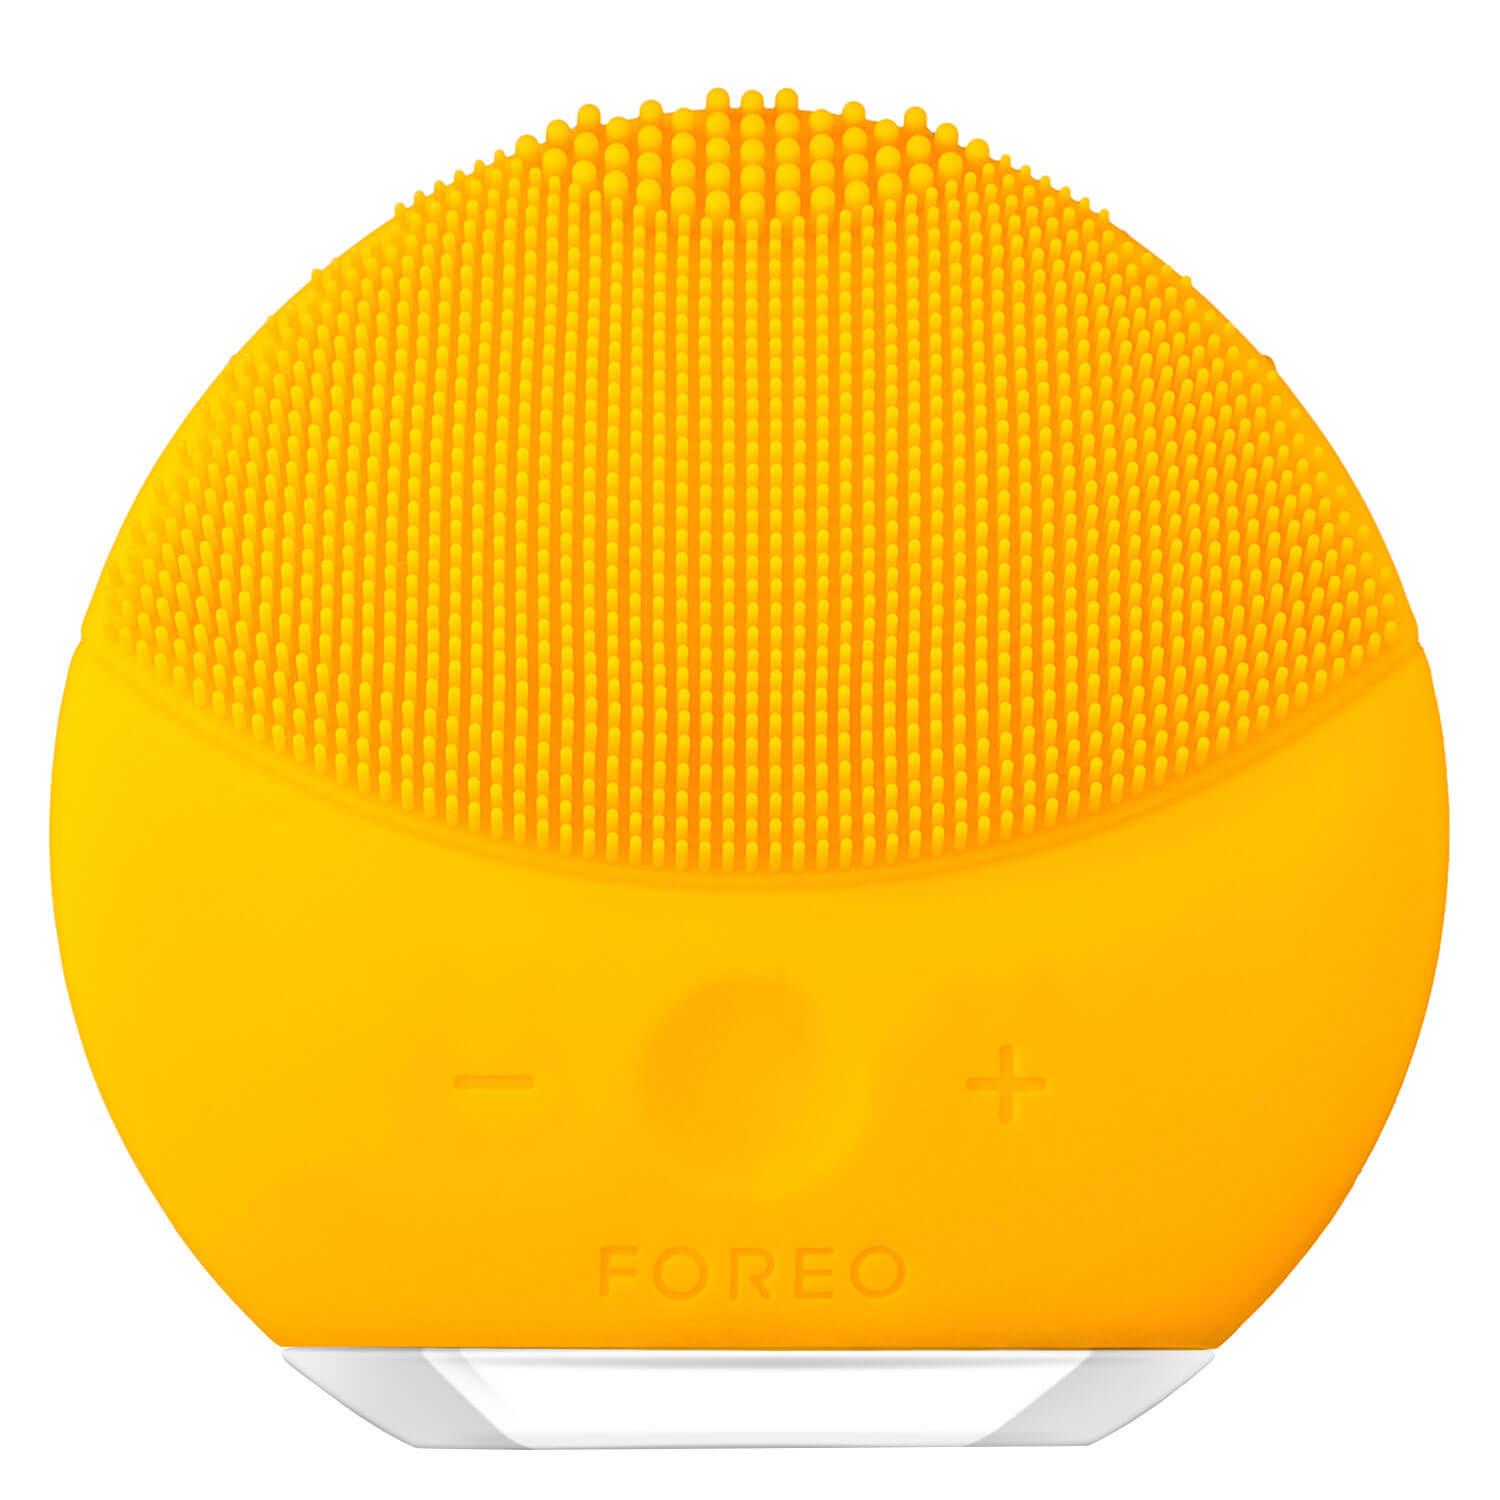 LUNA™ mini 2 - T-Sonic Facial Cleansing Brush Sunflower Yellow